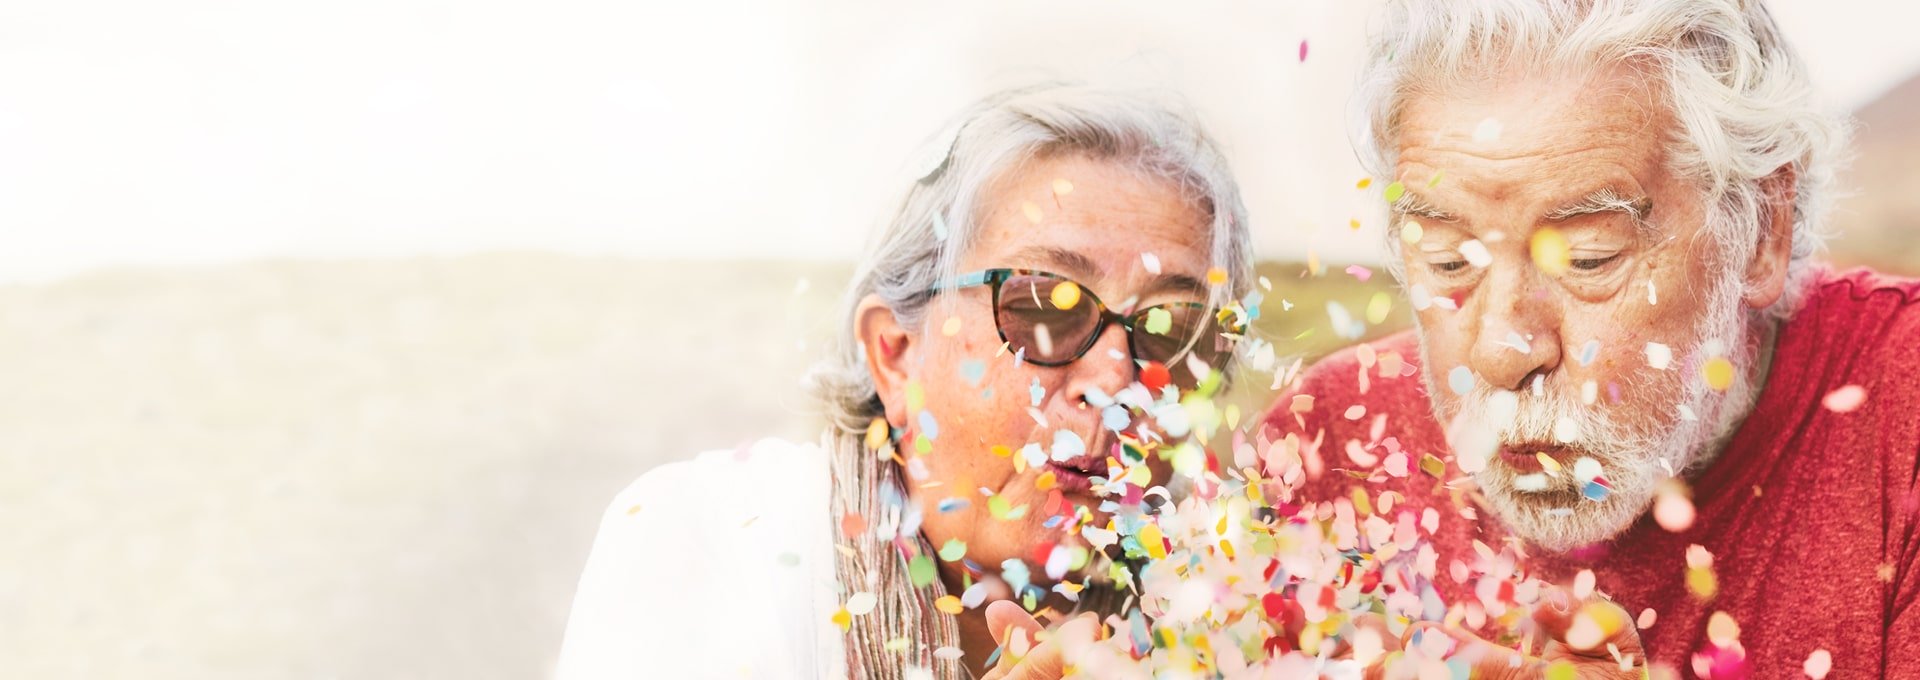 Older couple celebrating with confetti